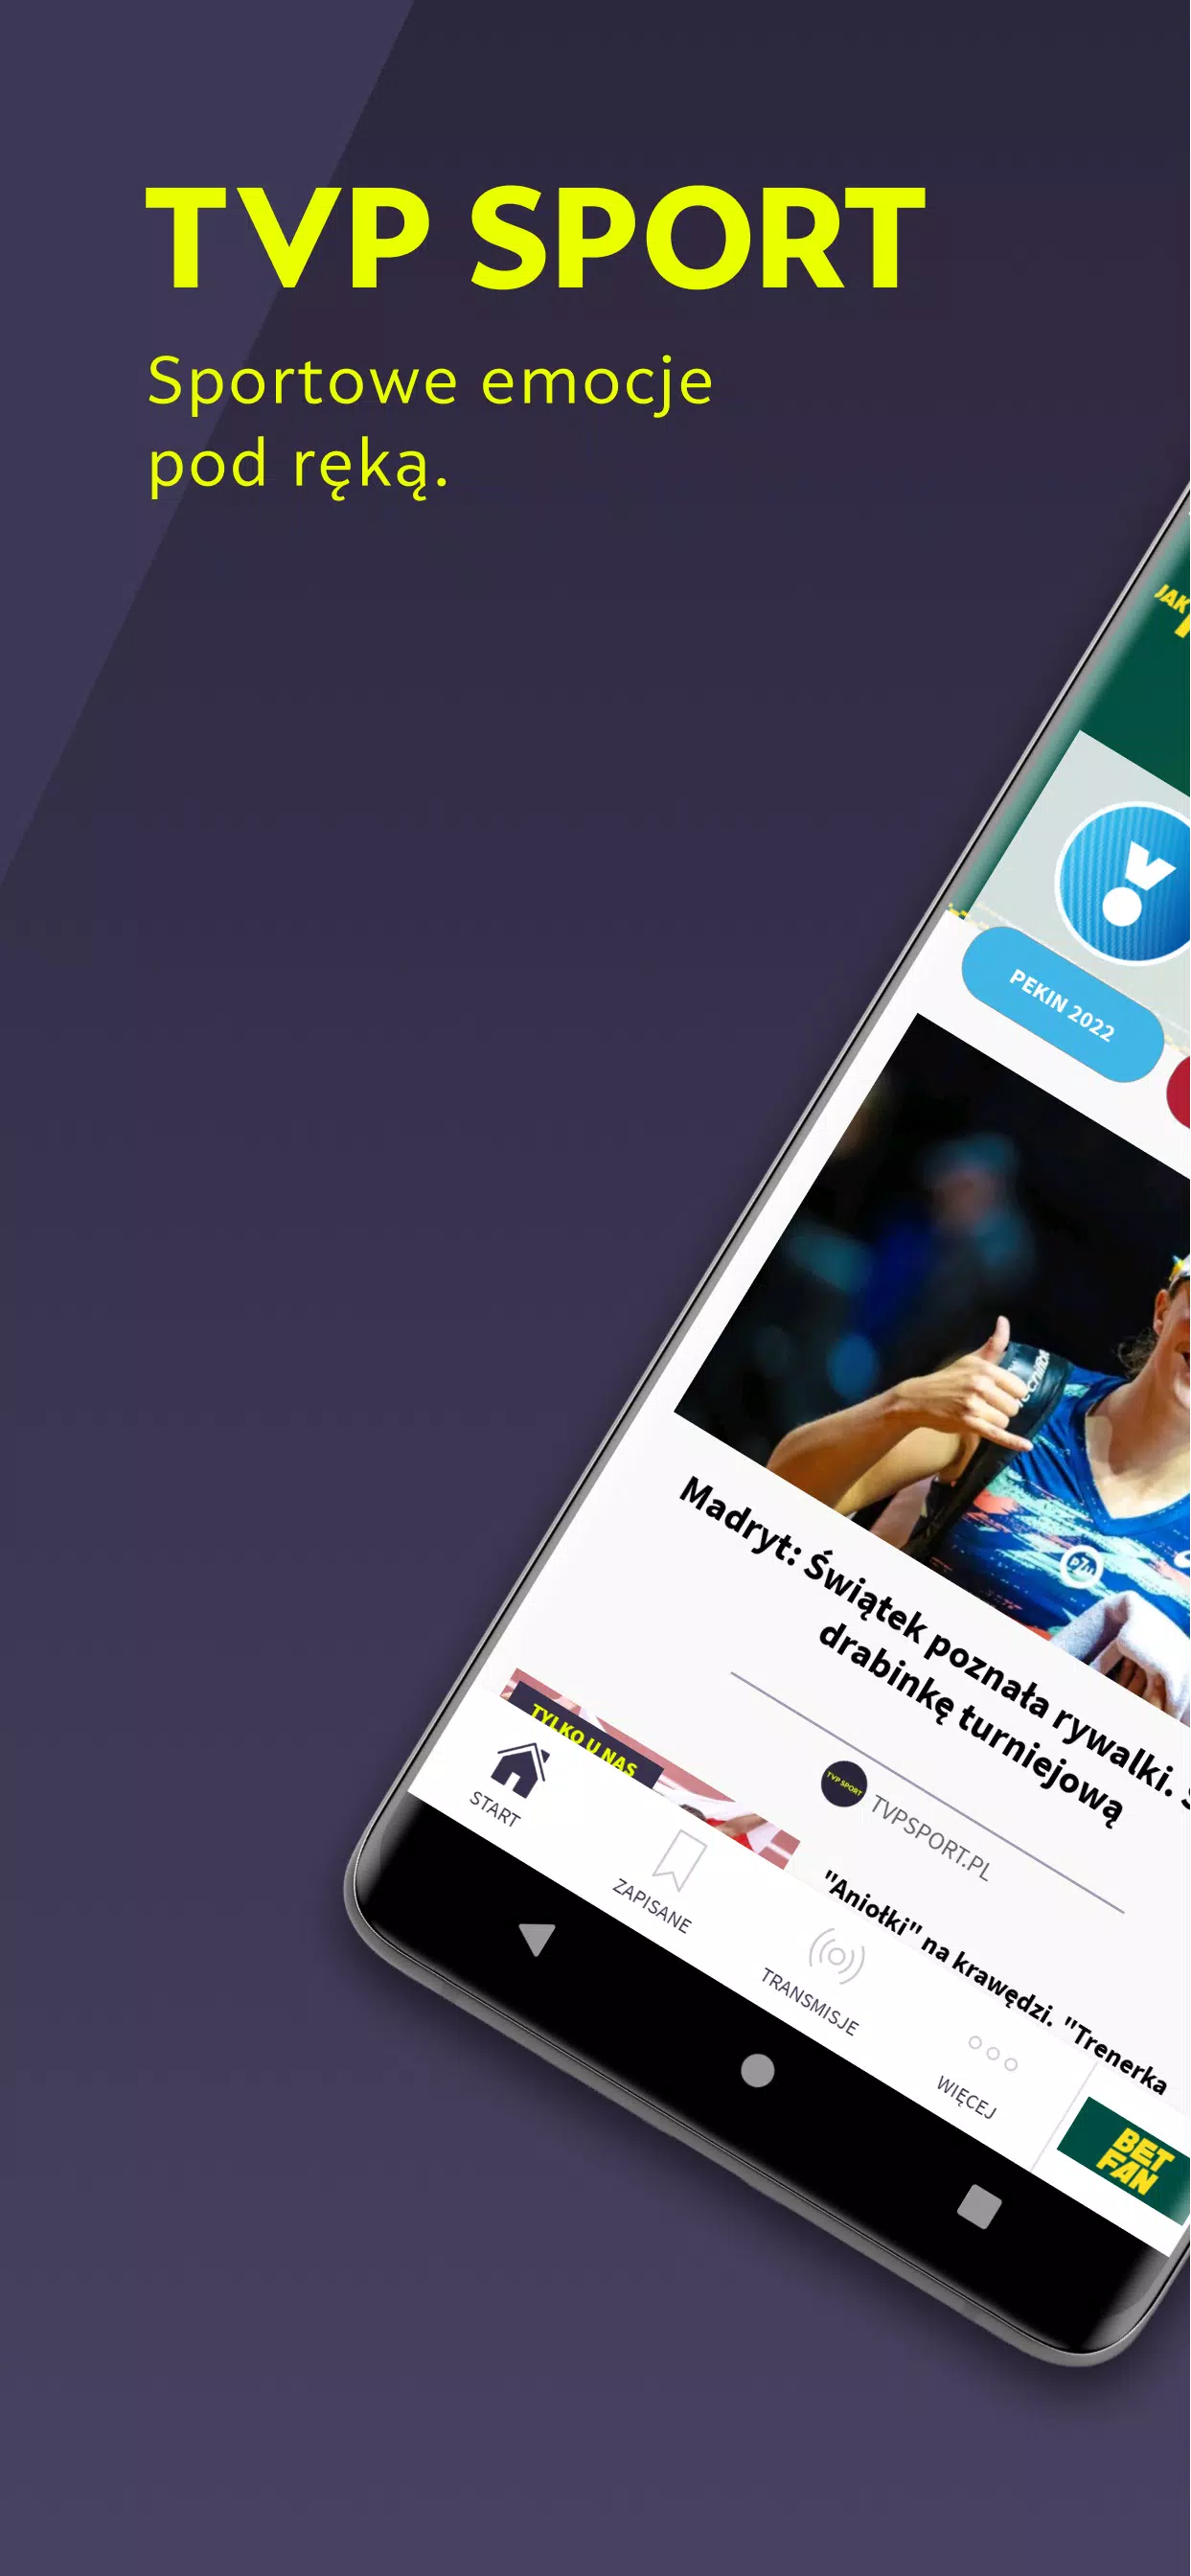 TVP Sport APK do pobrania na Androida